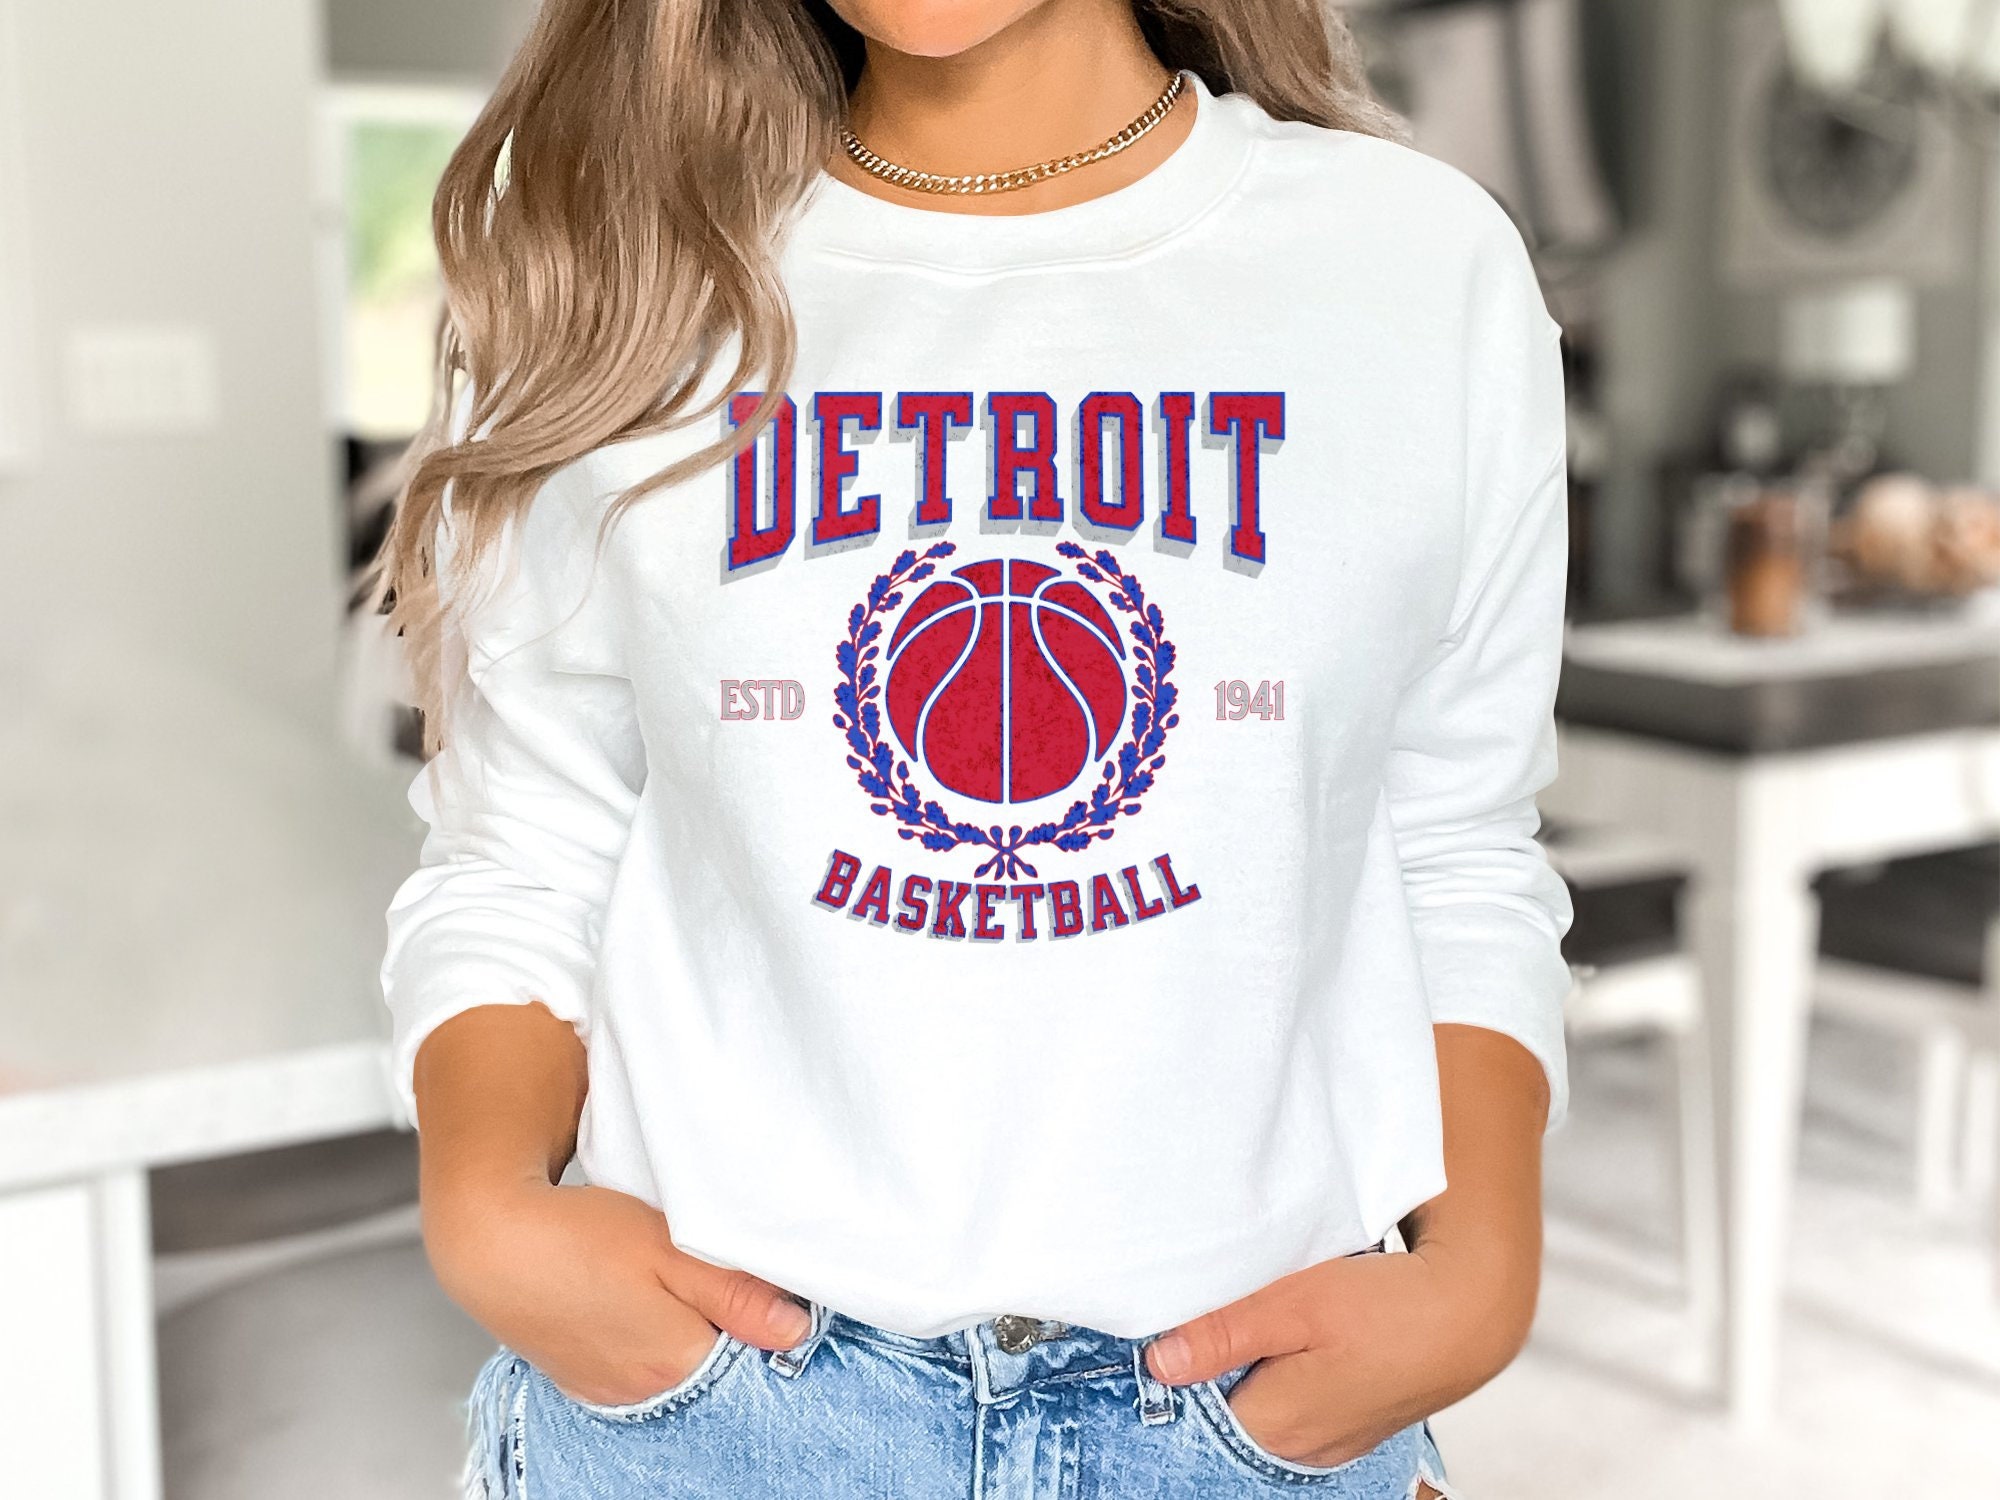 Detroit Pistons Fashion Colour Wordmark Crew Sweatshirt - Mens